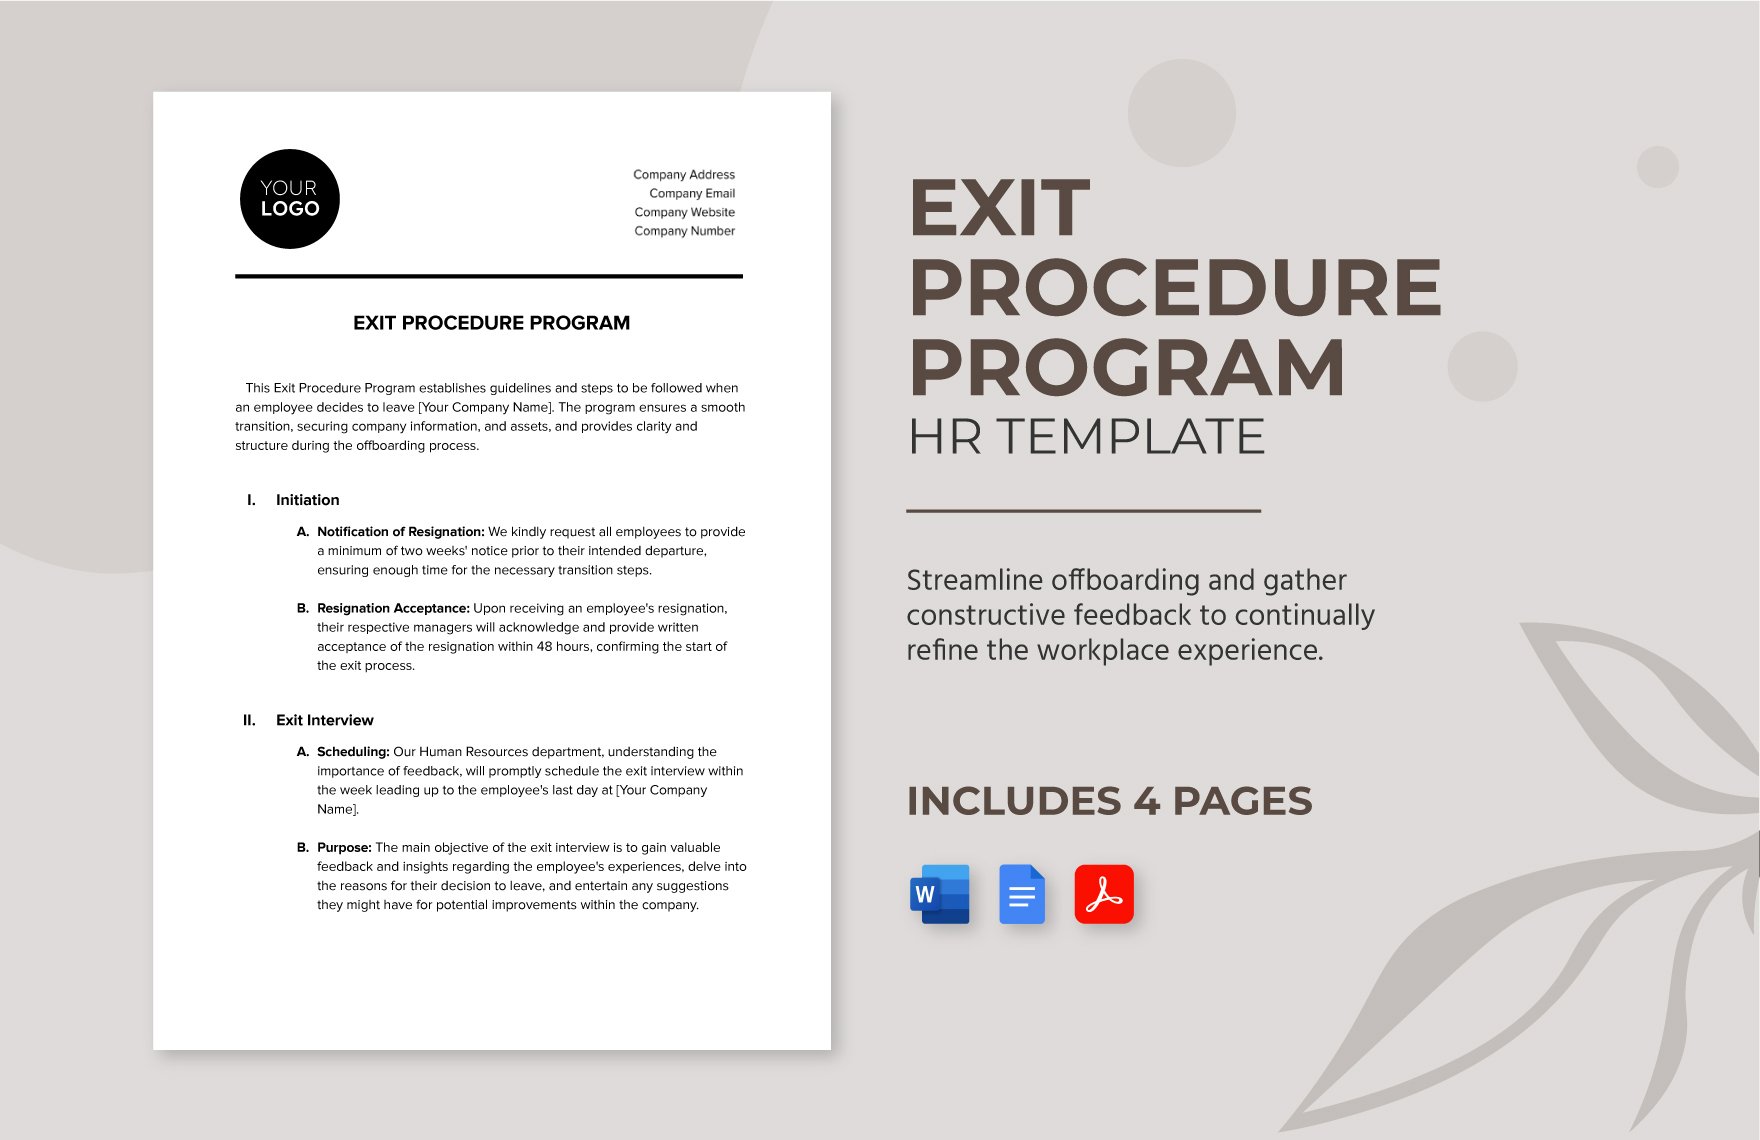 Exit Procedure Program HR Template